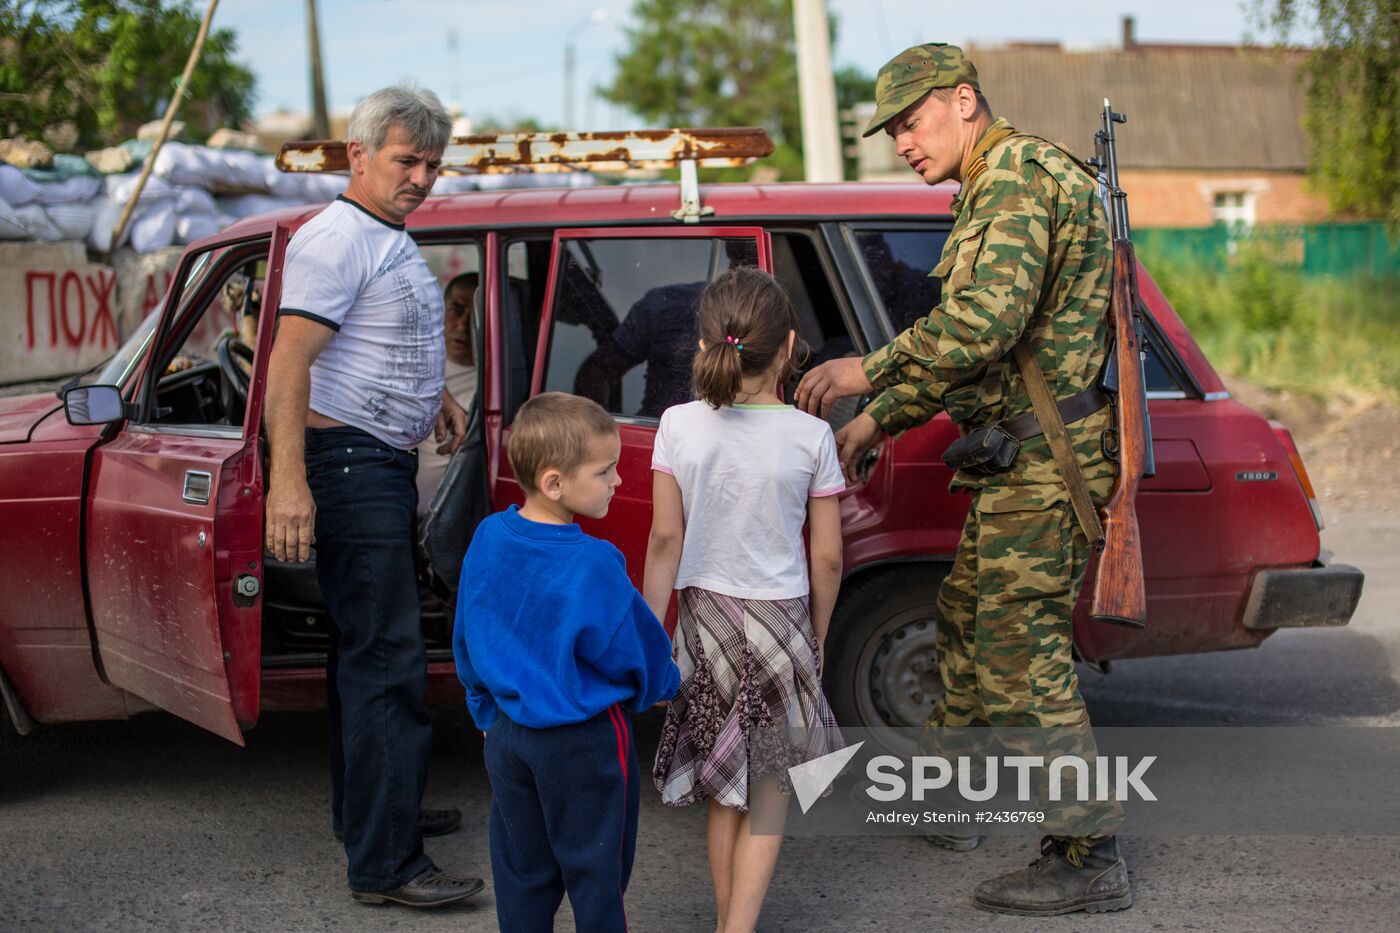 Situation in Slavyansk